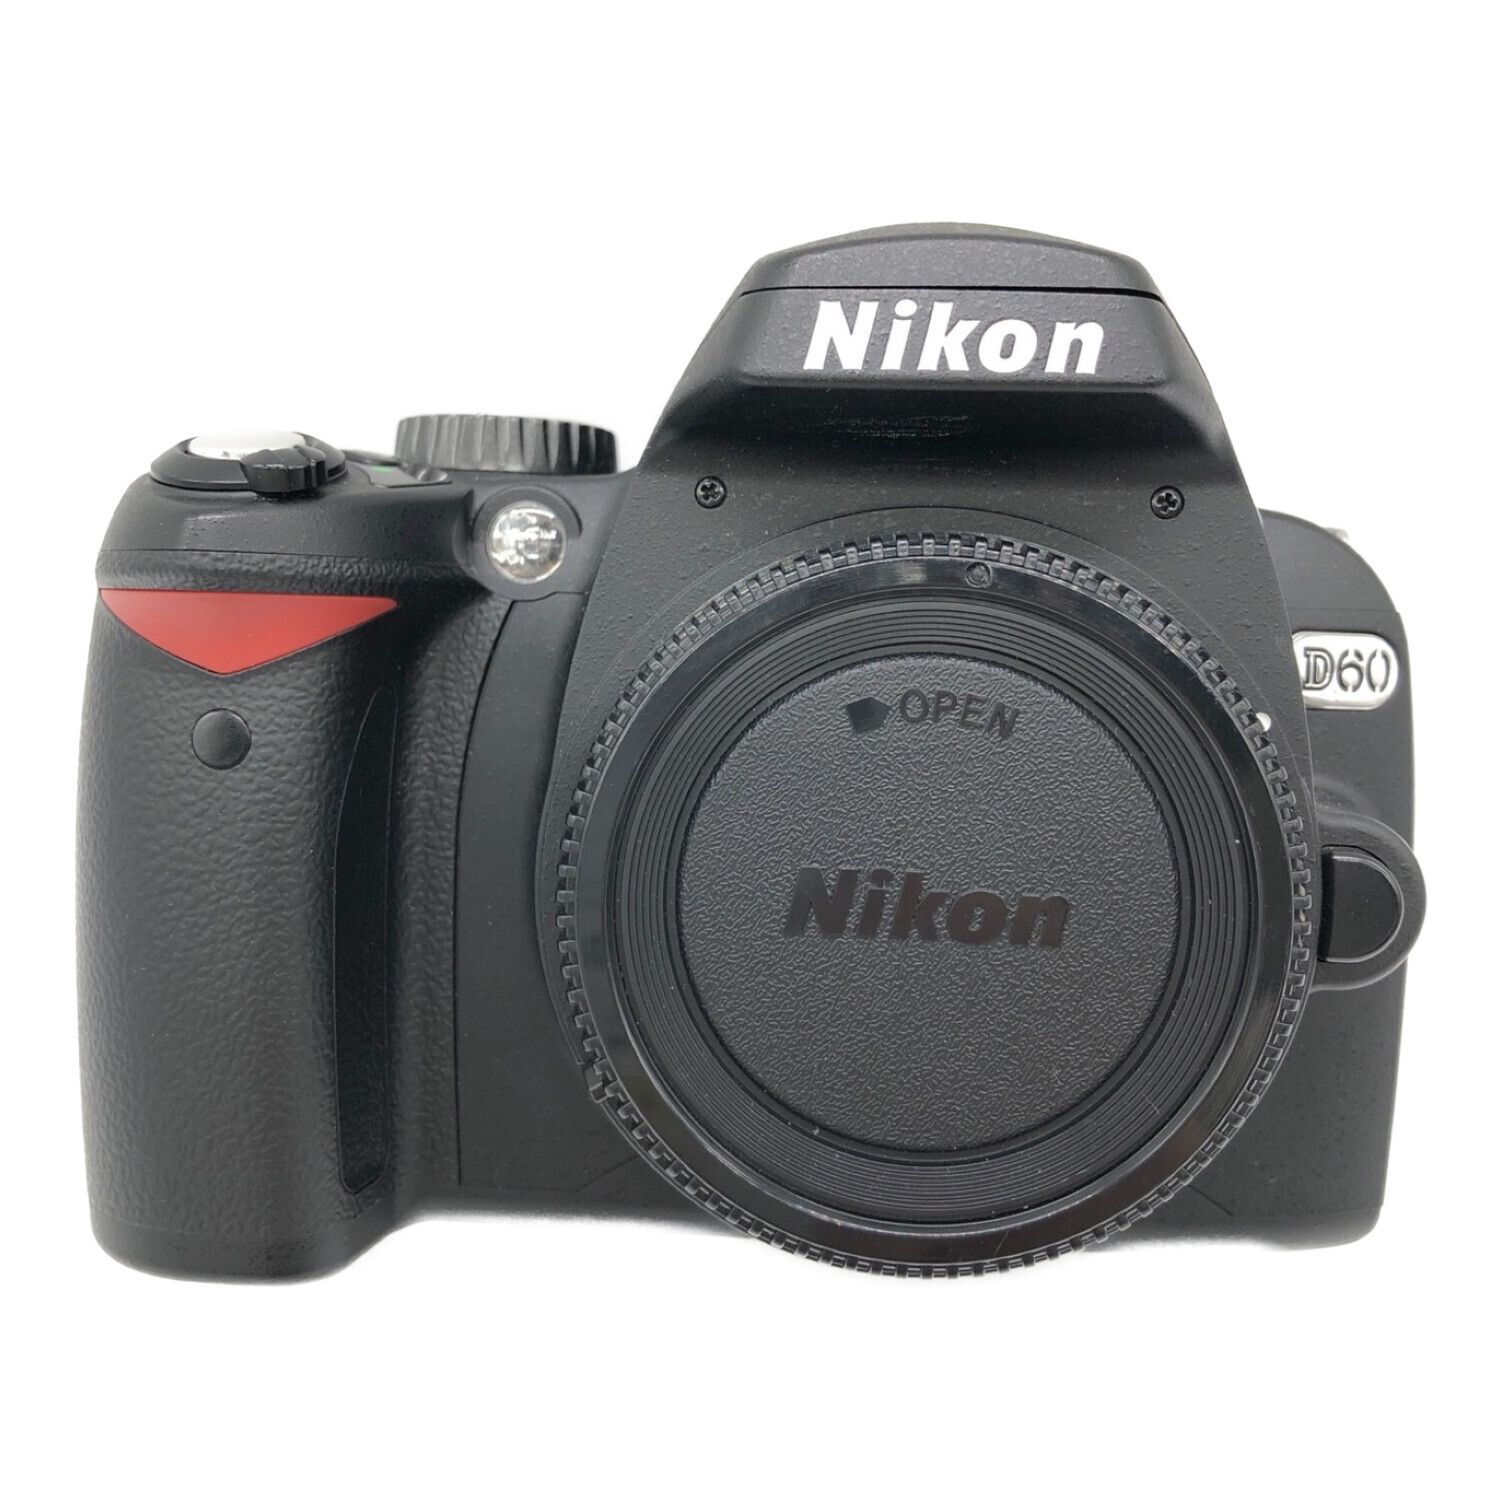 Nikon (ニコン) デジタル一眼レフカメラ D60 1075万画素 APS-C 専用